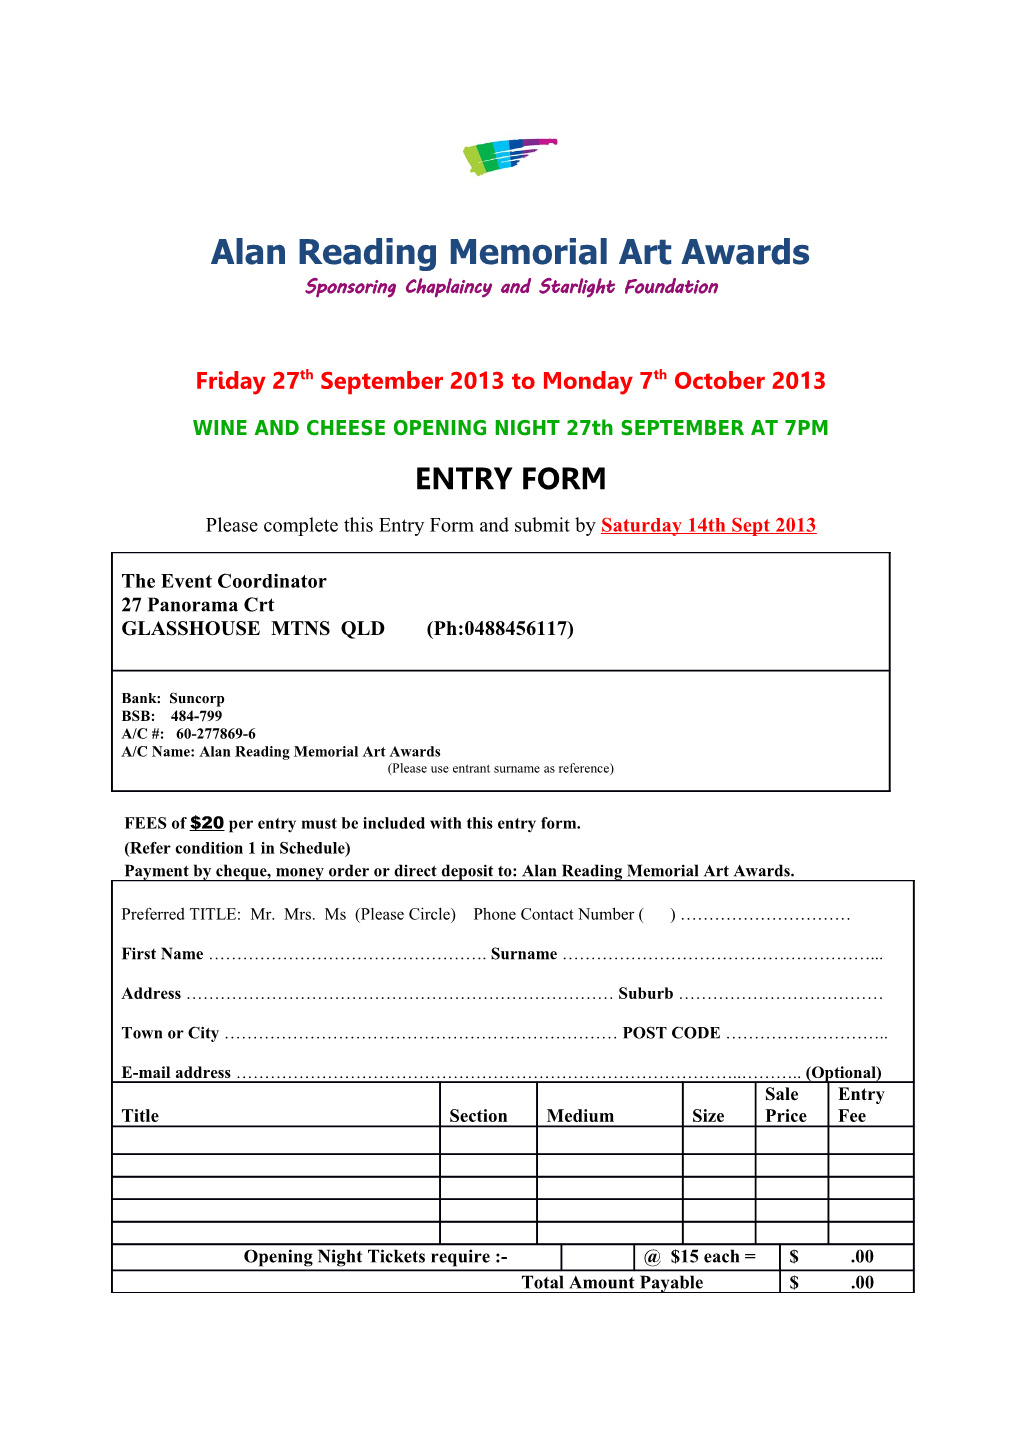 Alan Reading Memorial Art Awards